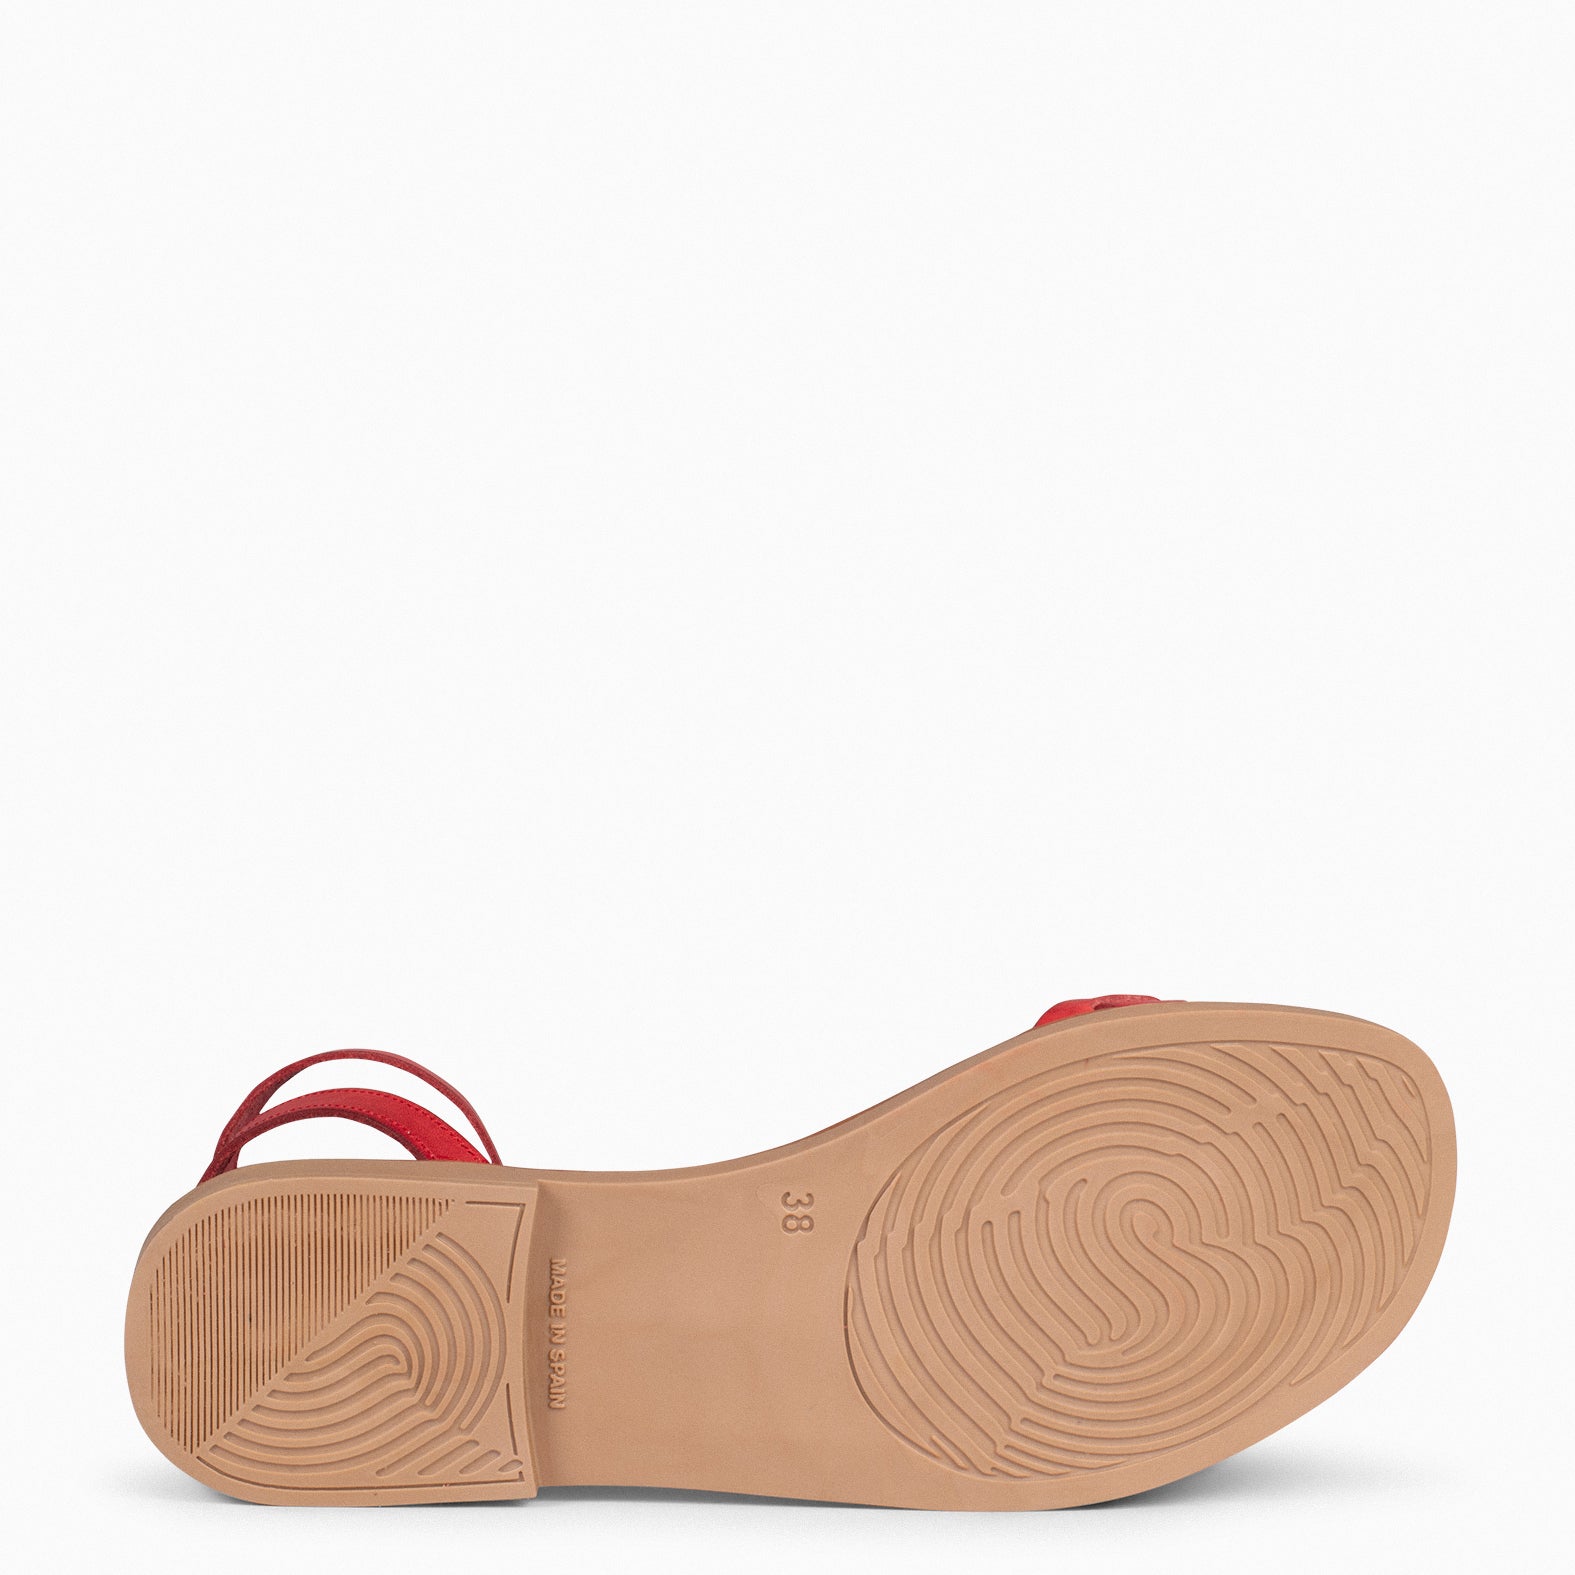 ARECA - RED Women's Flat Sandals